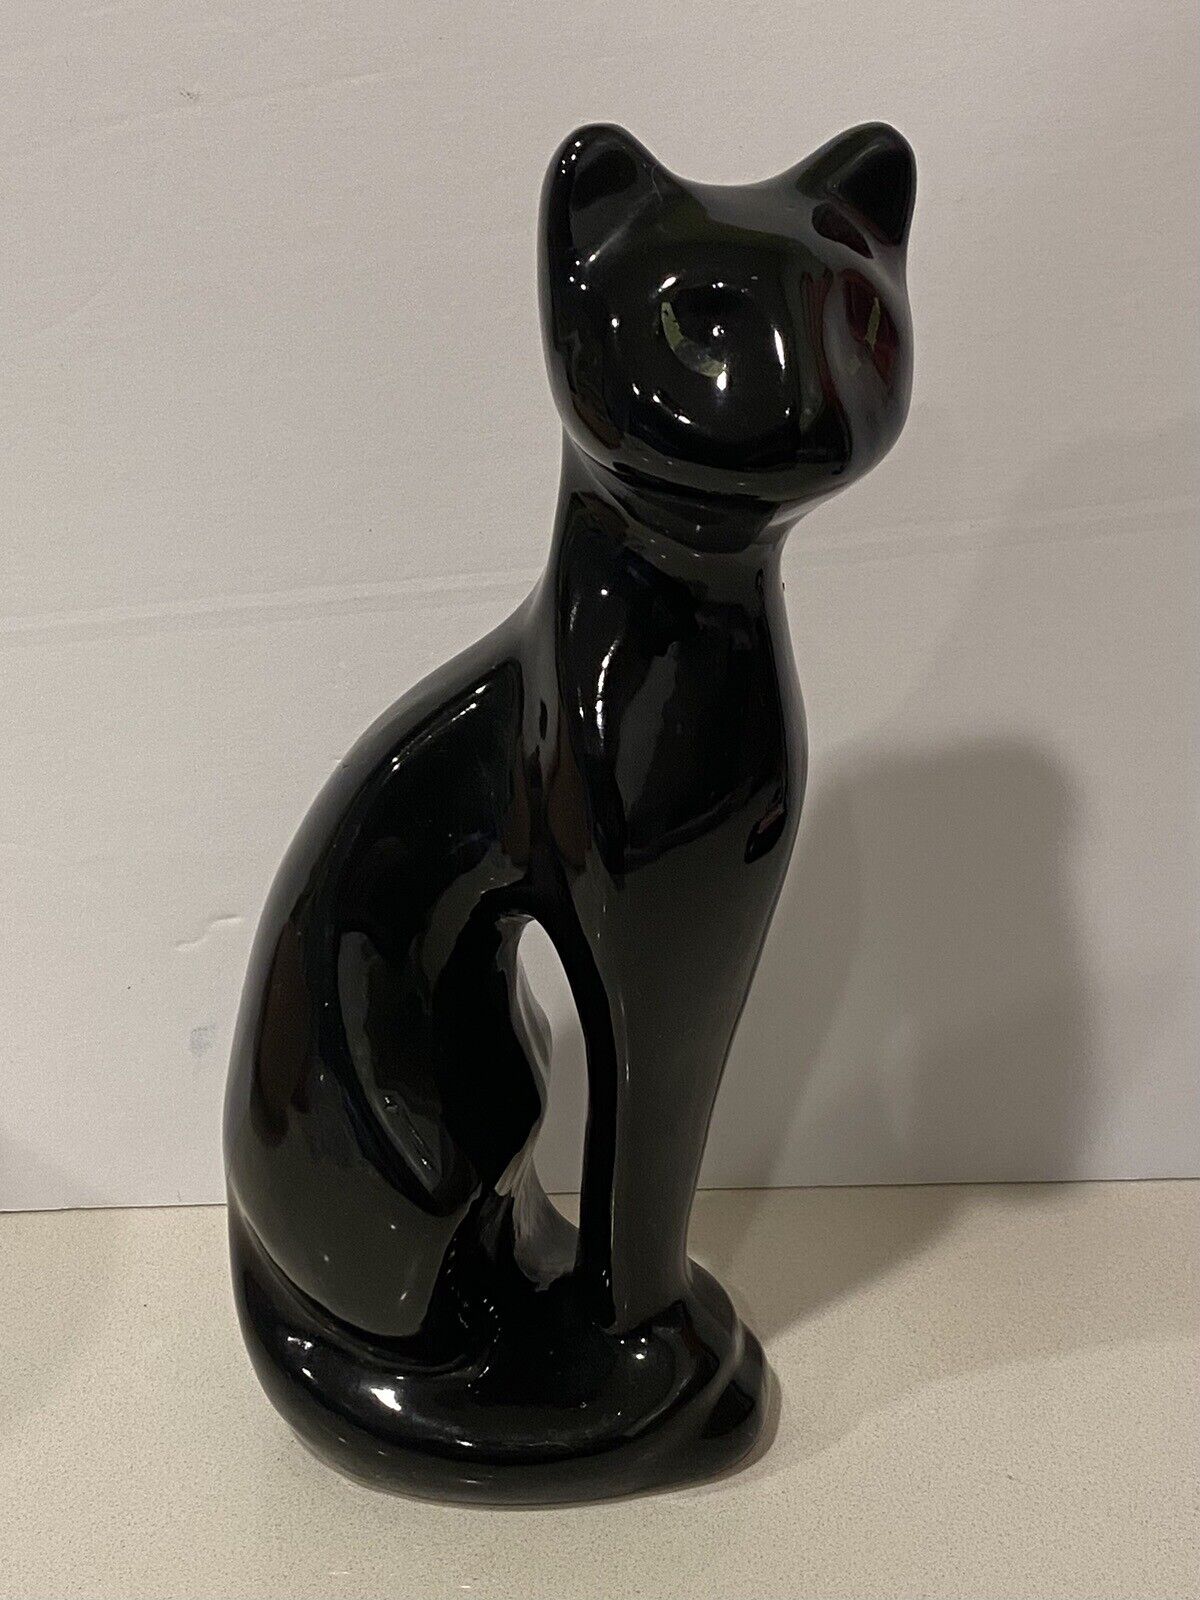 Vintage Black Ceramic Kitty Cat Statue Figurine Green Painted Eyes MCM Style